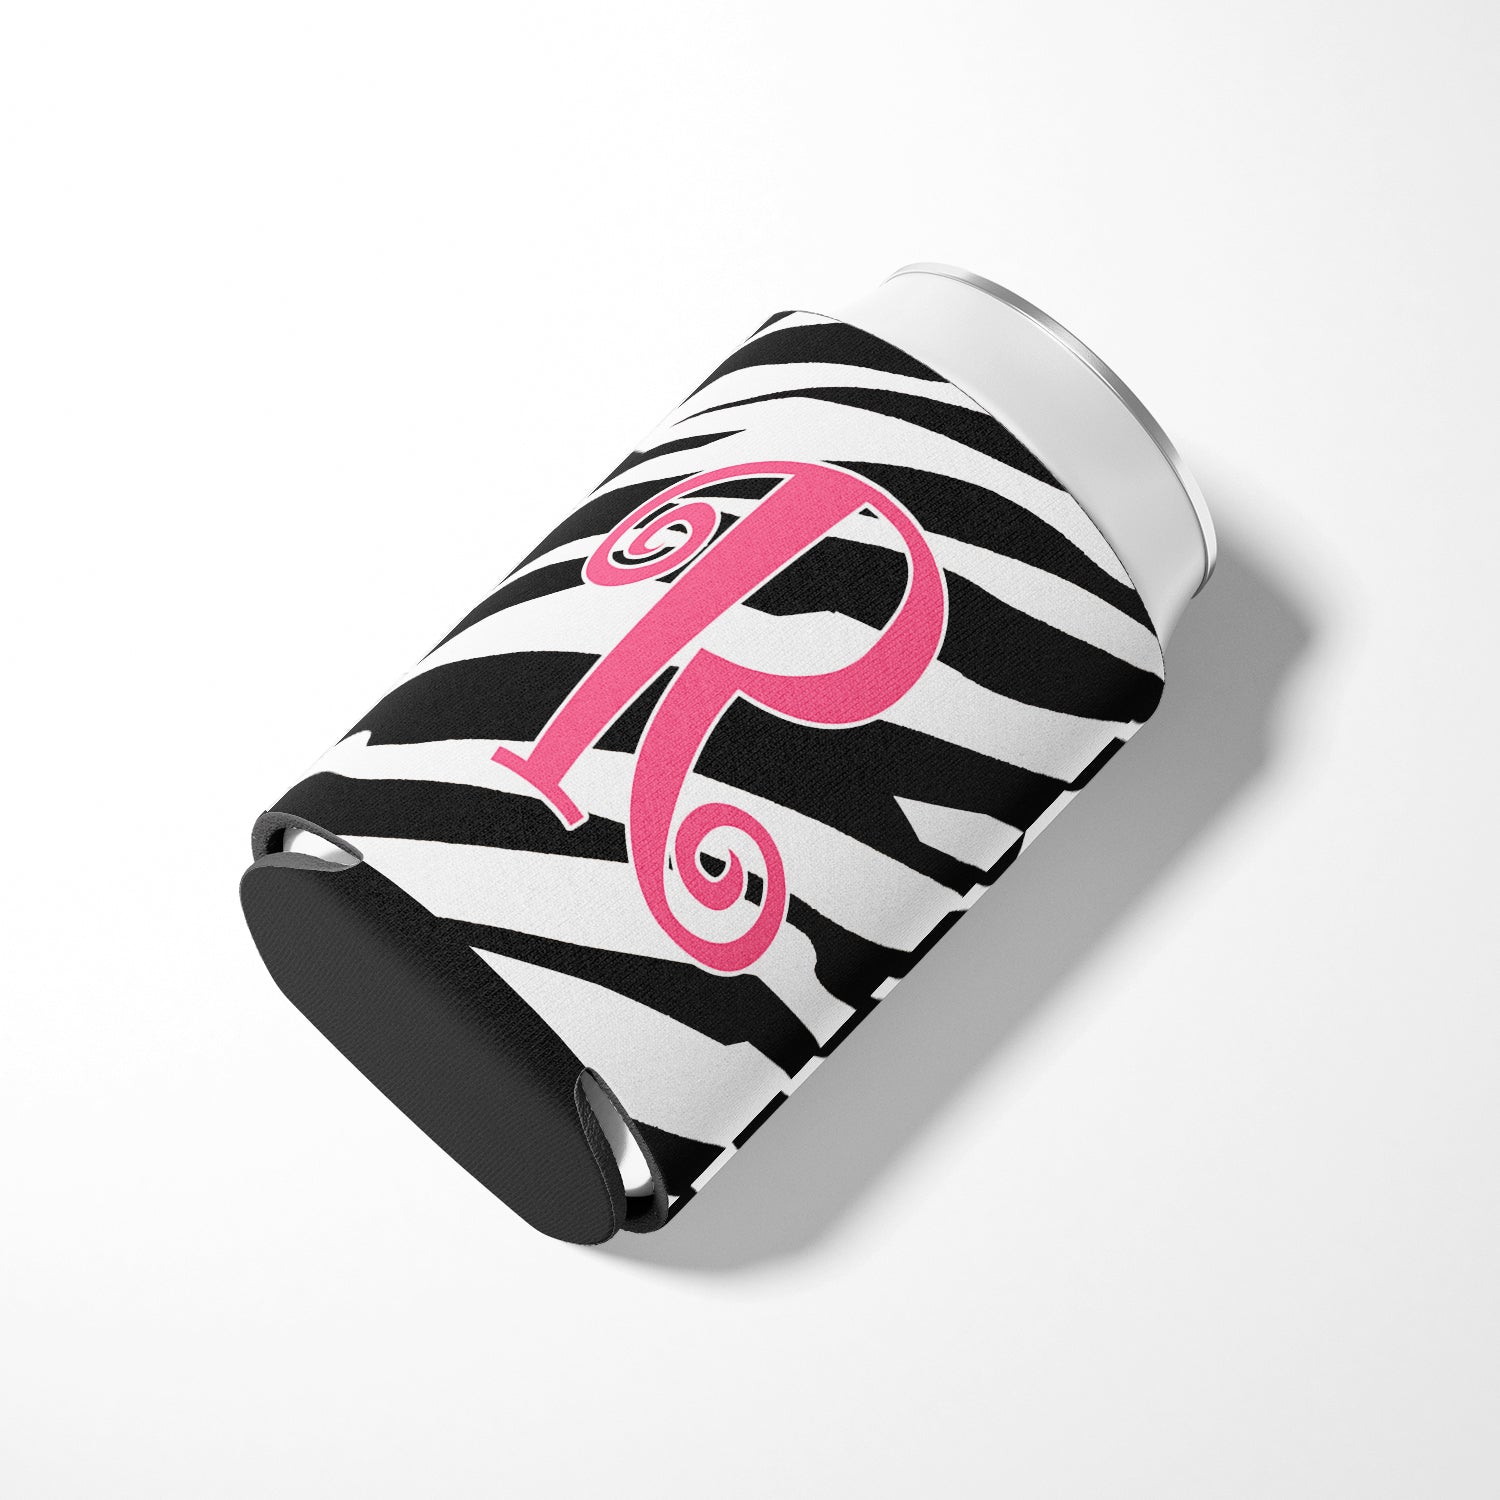 Letter R Initial Monogram - Zebra Stripe and Pink Can or Bottle Beverage Insulator Hugger.